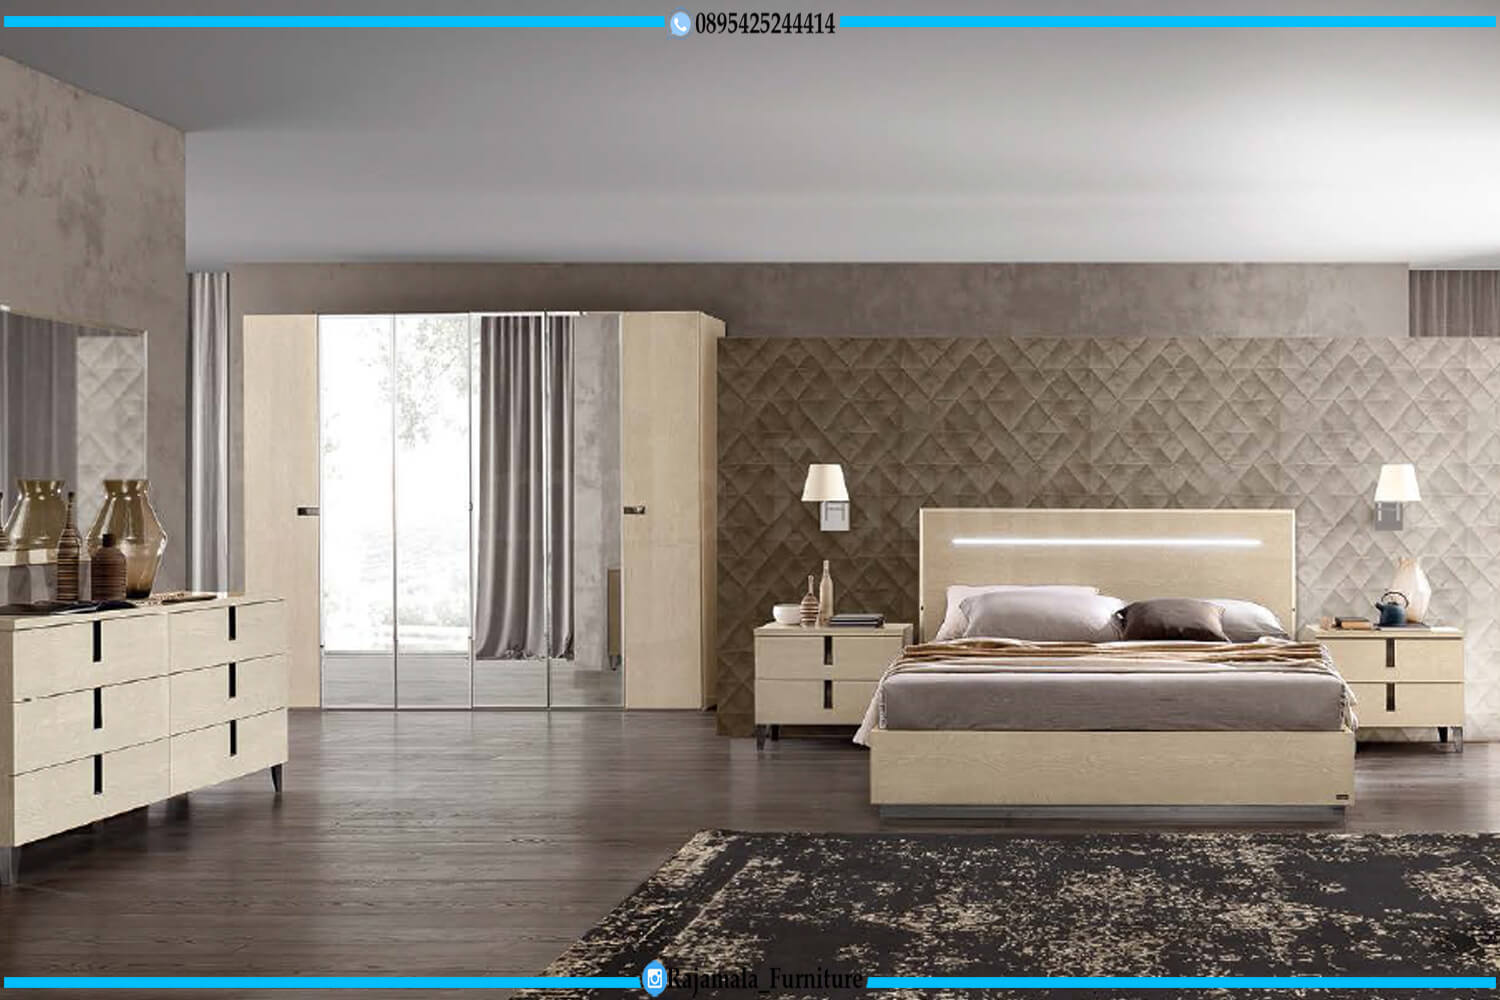 Tempat Tidur Minimalis Jepara Simple Modern Luxury Design RM-0941